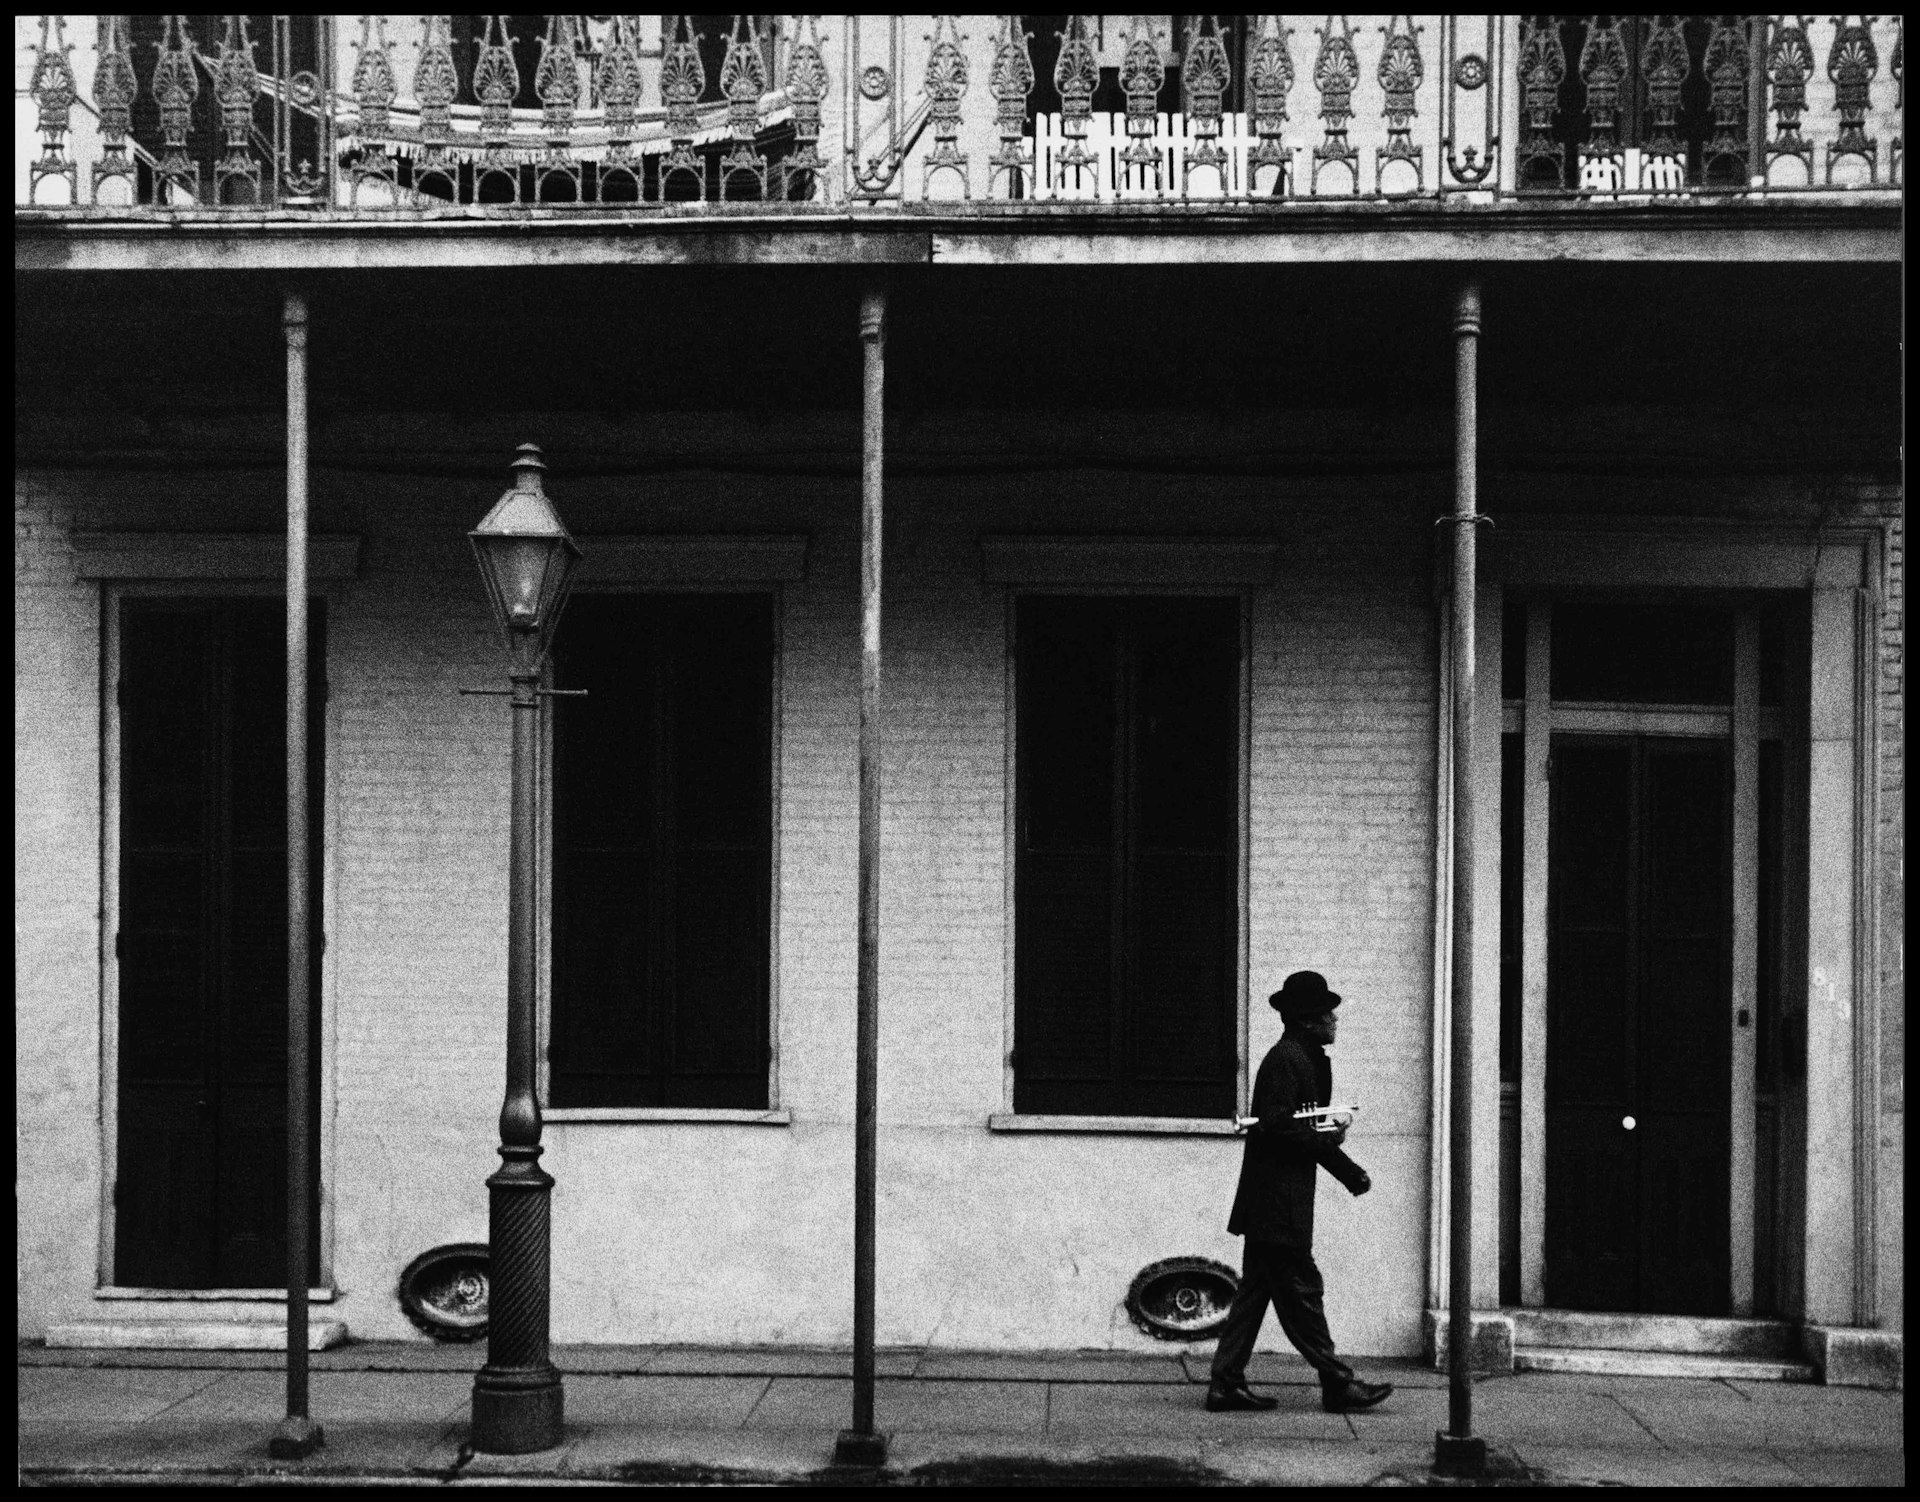 USA. New Orleans, Louisiana. 1958. Ernest MILLER nicknamed Kid Punch MILLER trumpet player and singer returning home at 6 am. © Dennis Stock / Magnum Photos